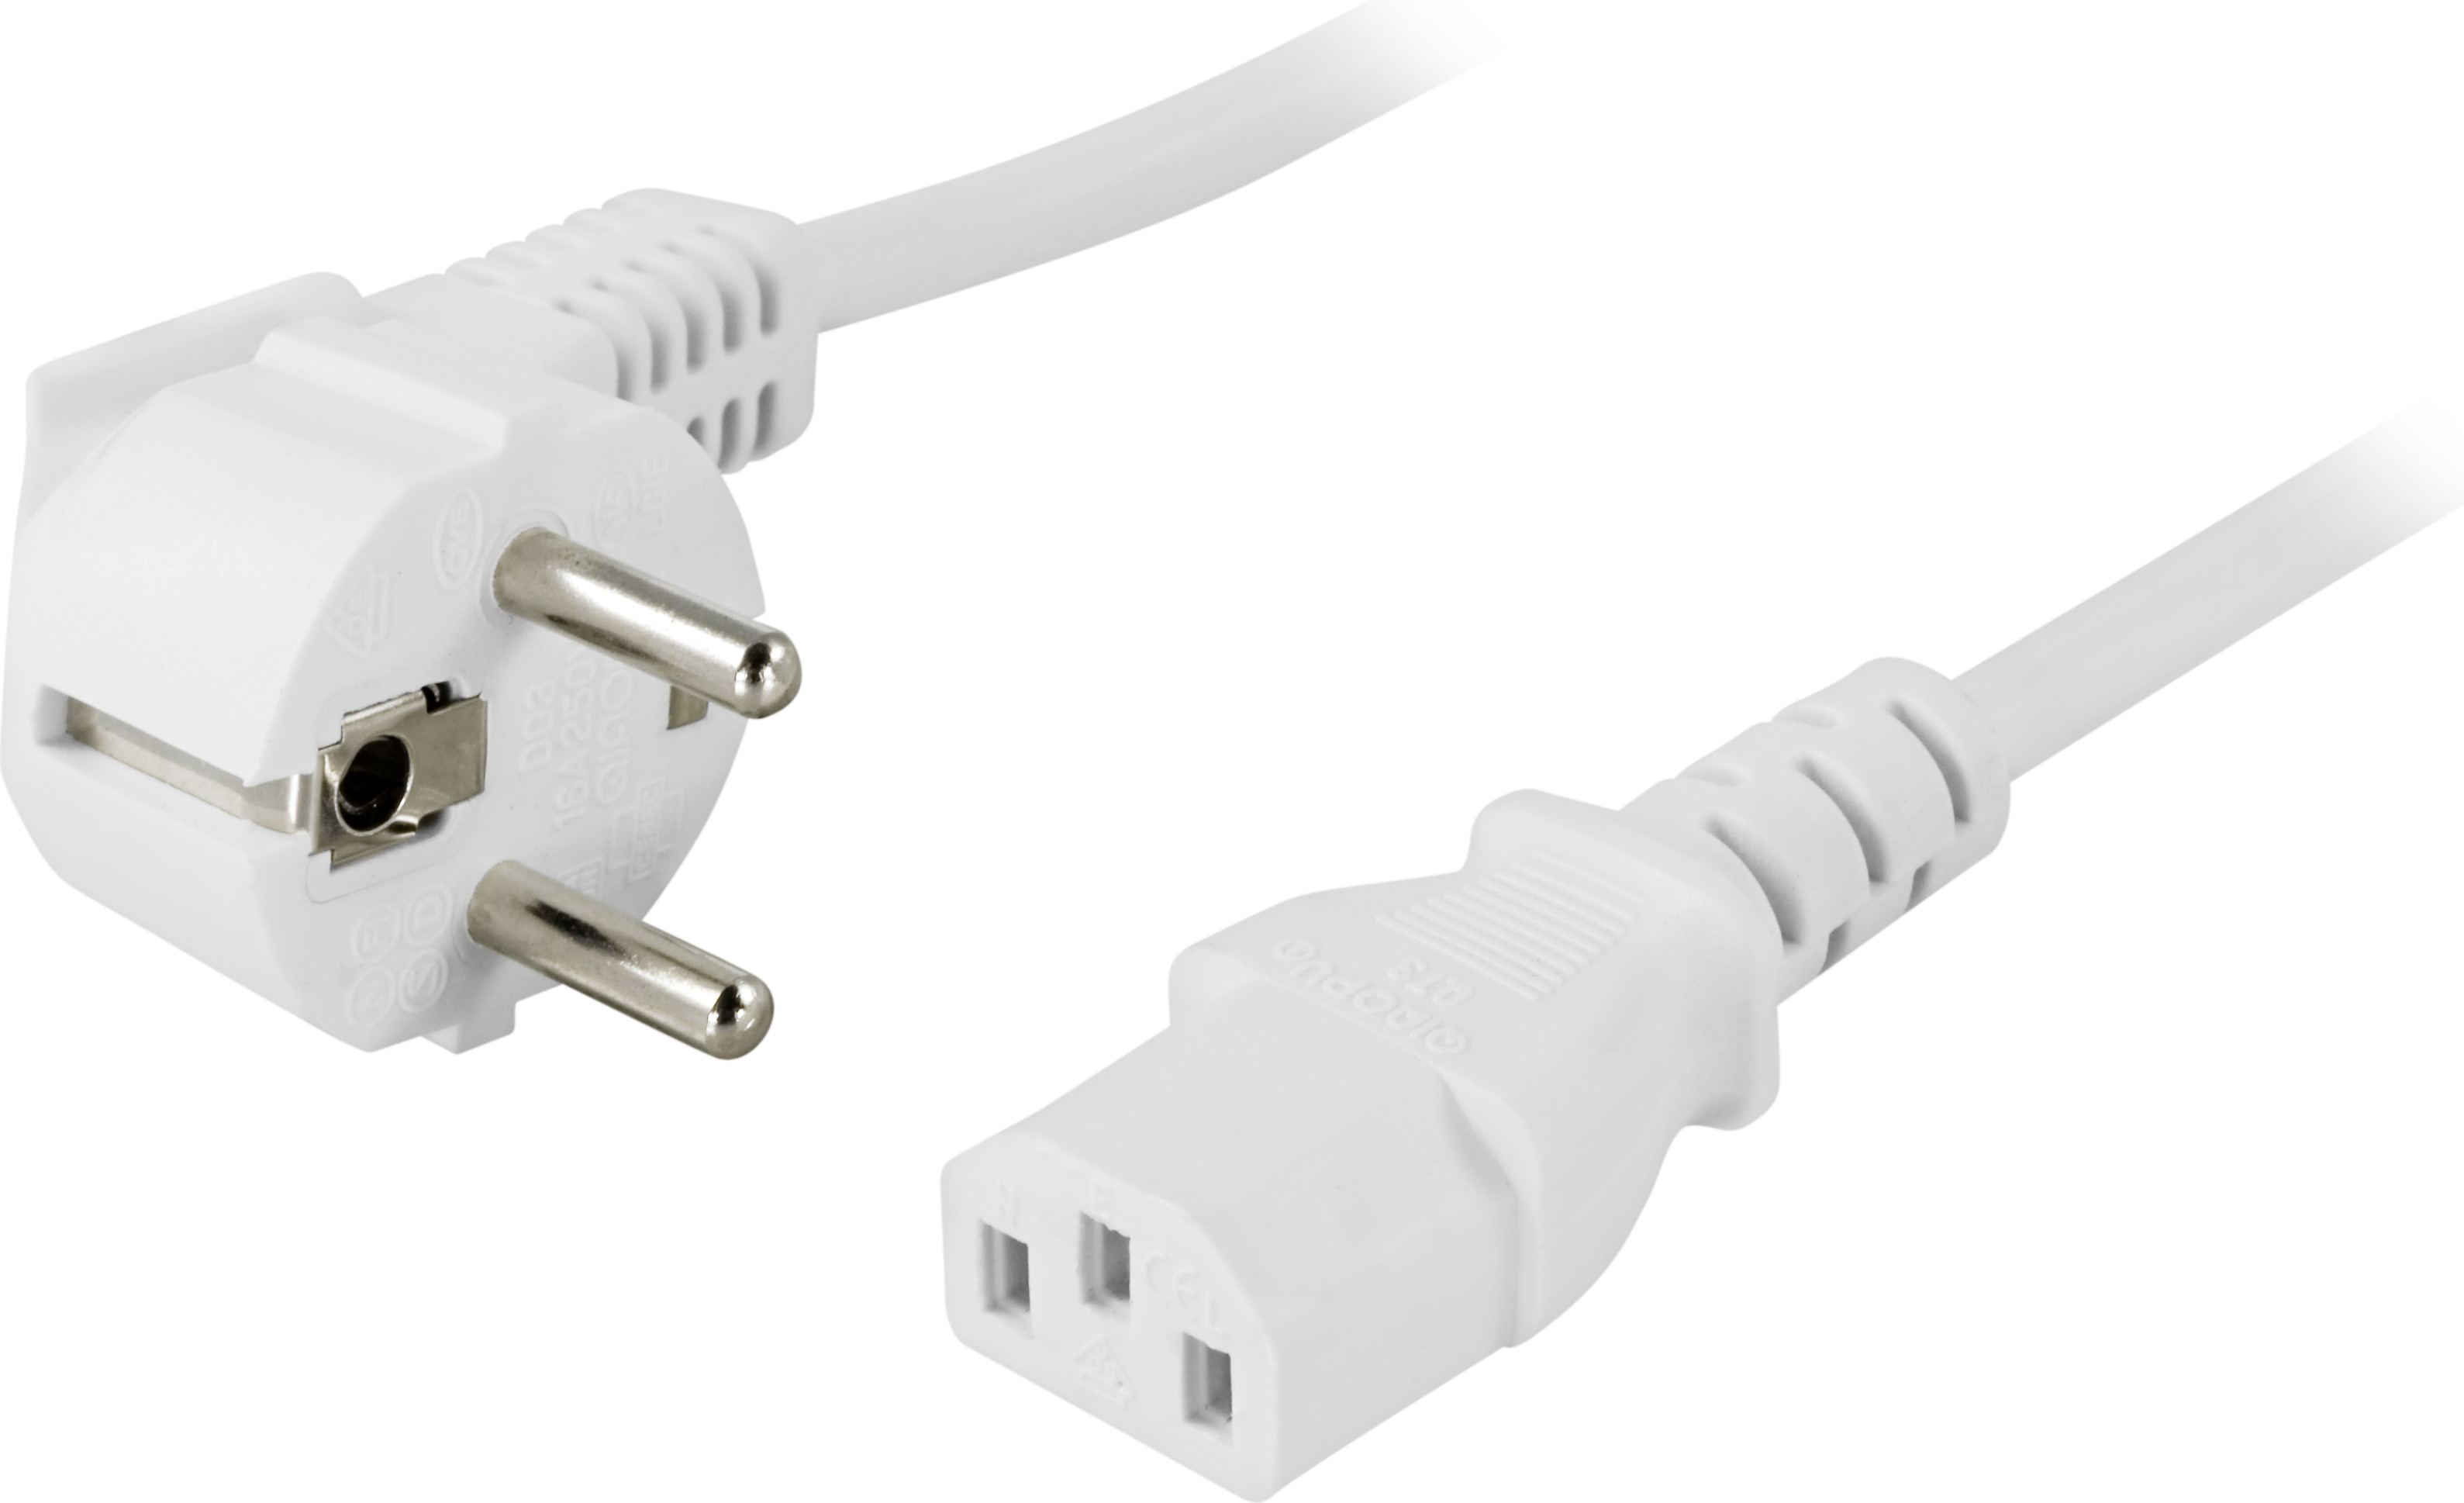 Cable DELTACO angled CEE 7/7 to straight IEC 60320 C13 , max 250V / 10A, 1m, white / DEL-109EV